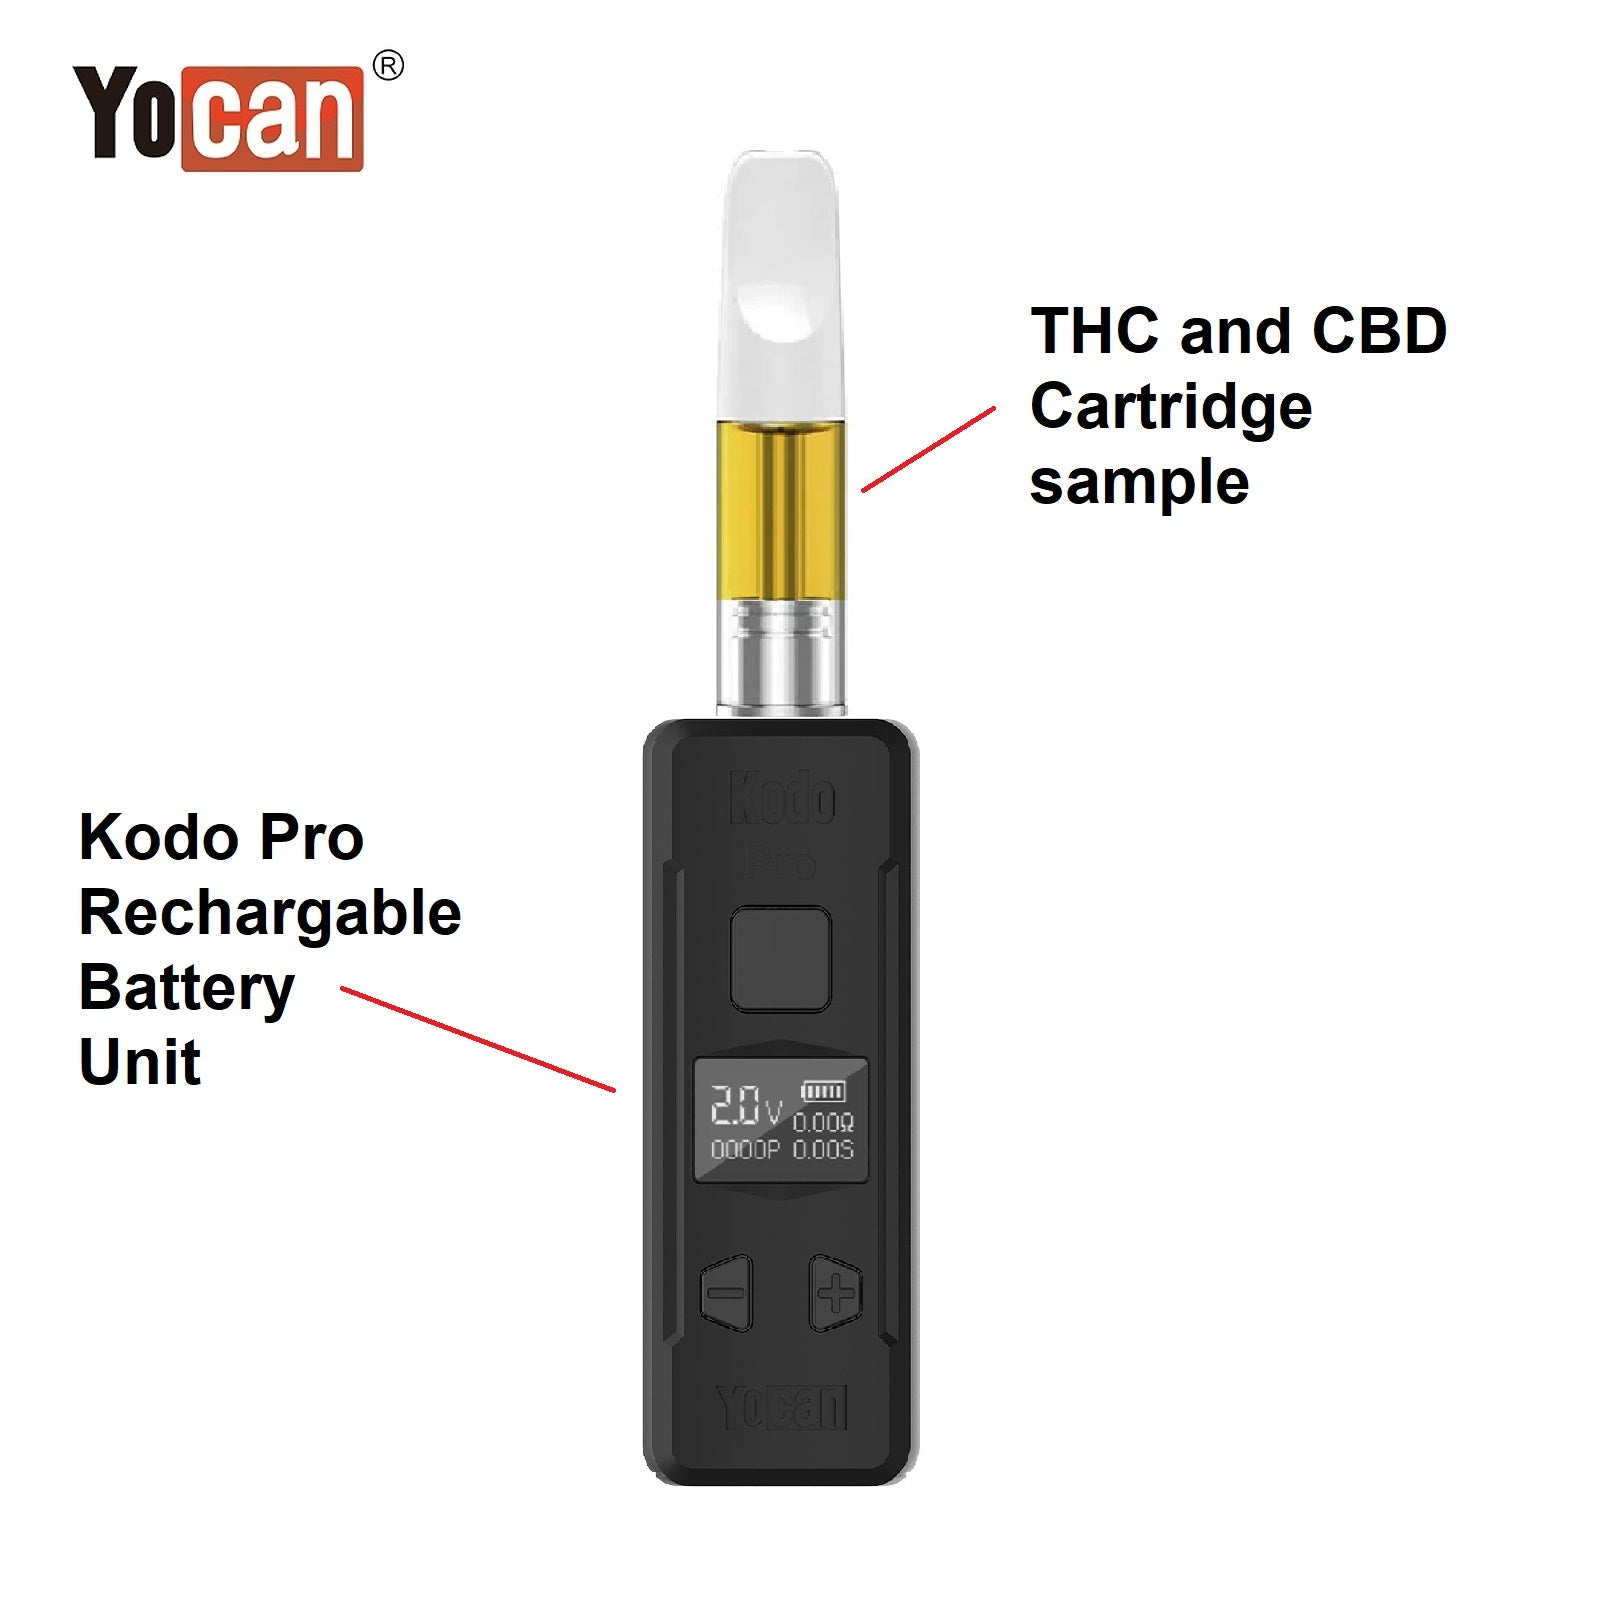 Yocan Kodo Pro 510 Vaporizer Battery 400mAh to be used with THC & CBD cartridges